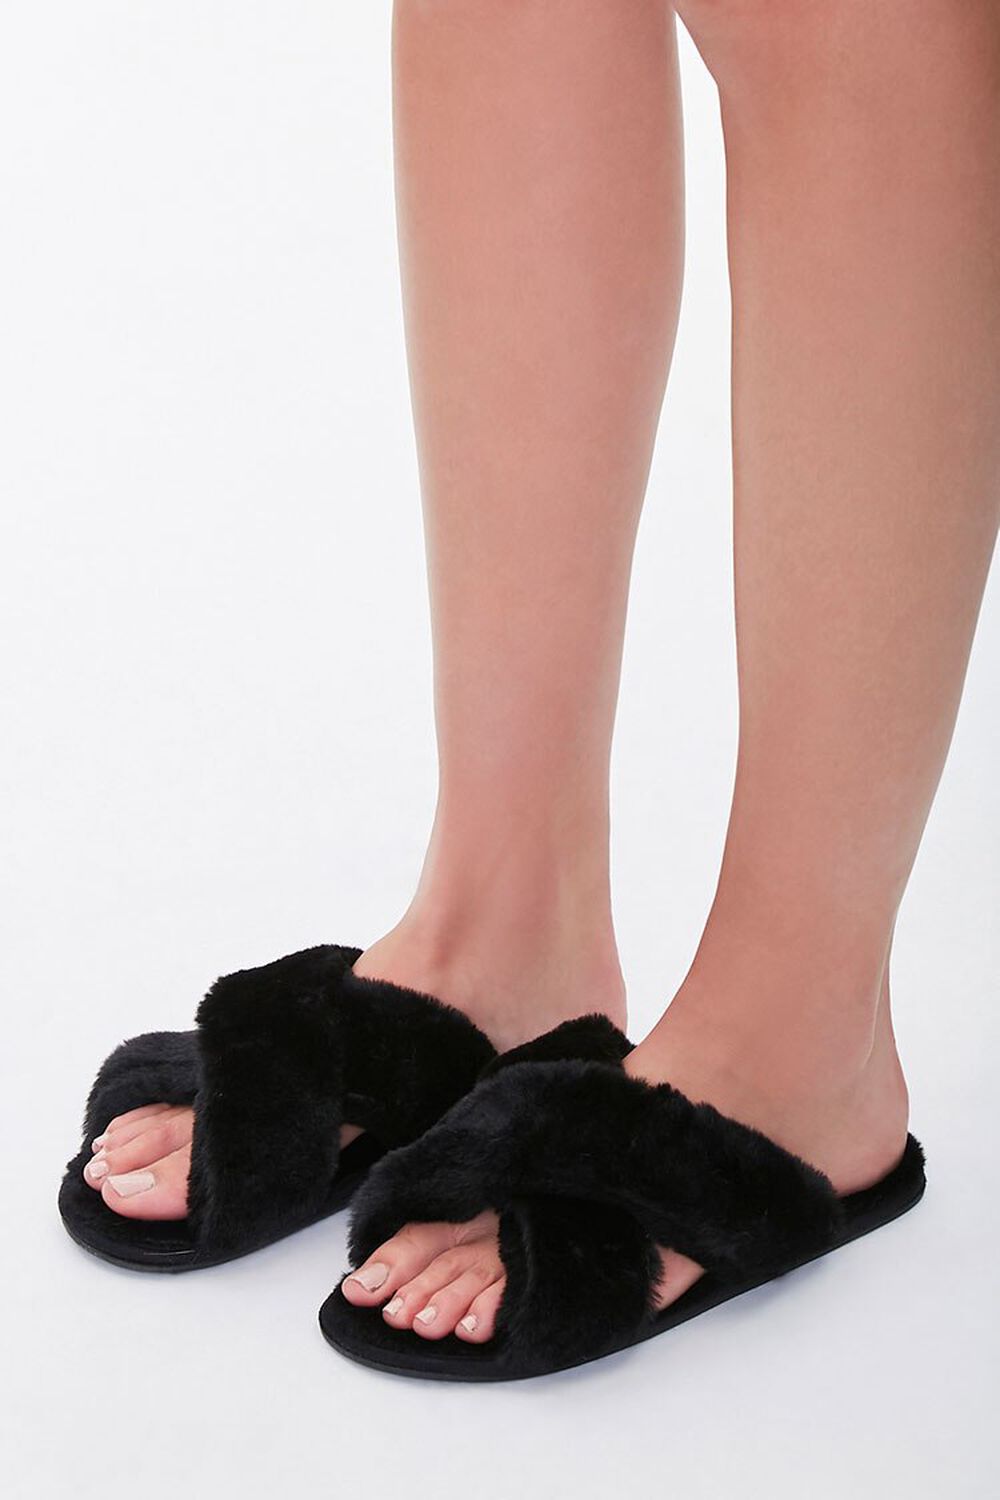 BLACK Faux Fur Crisscross Slippers, image 1